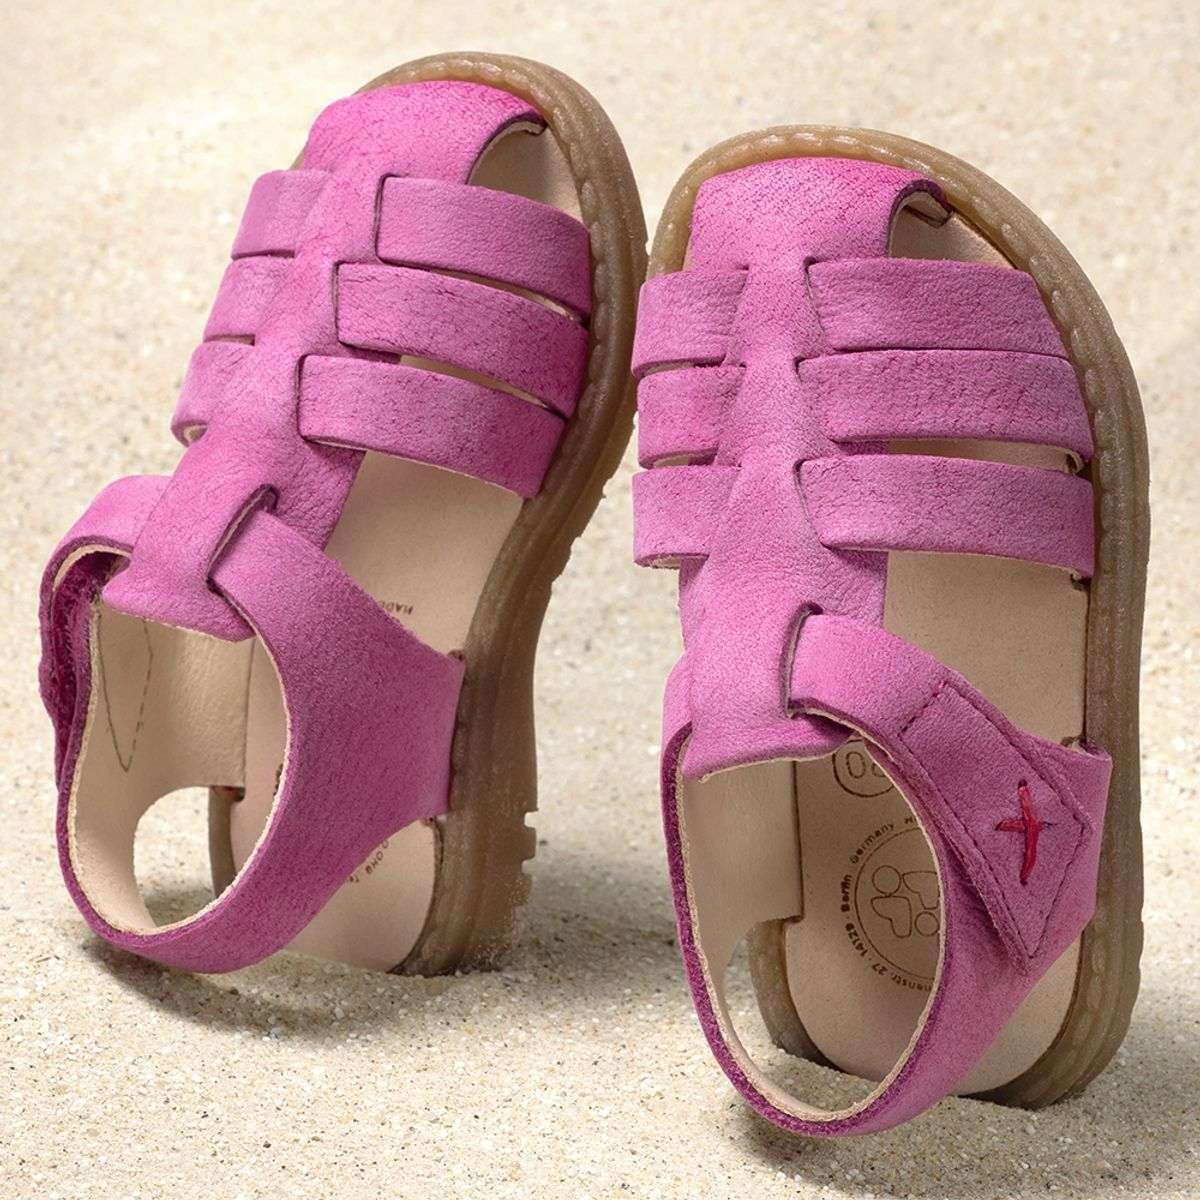 Unisex Sandale Allergikerfreundliche Kinder Kinderschuhe Fiesta, Pink POLOLO Kinderscchuhe